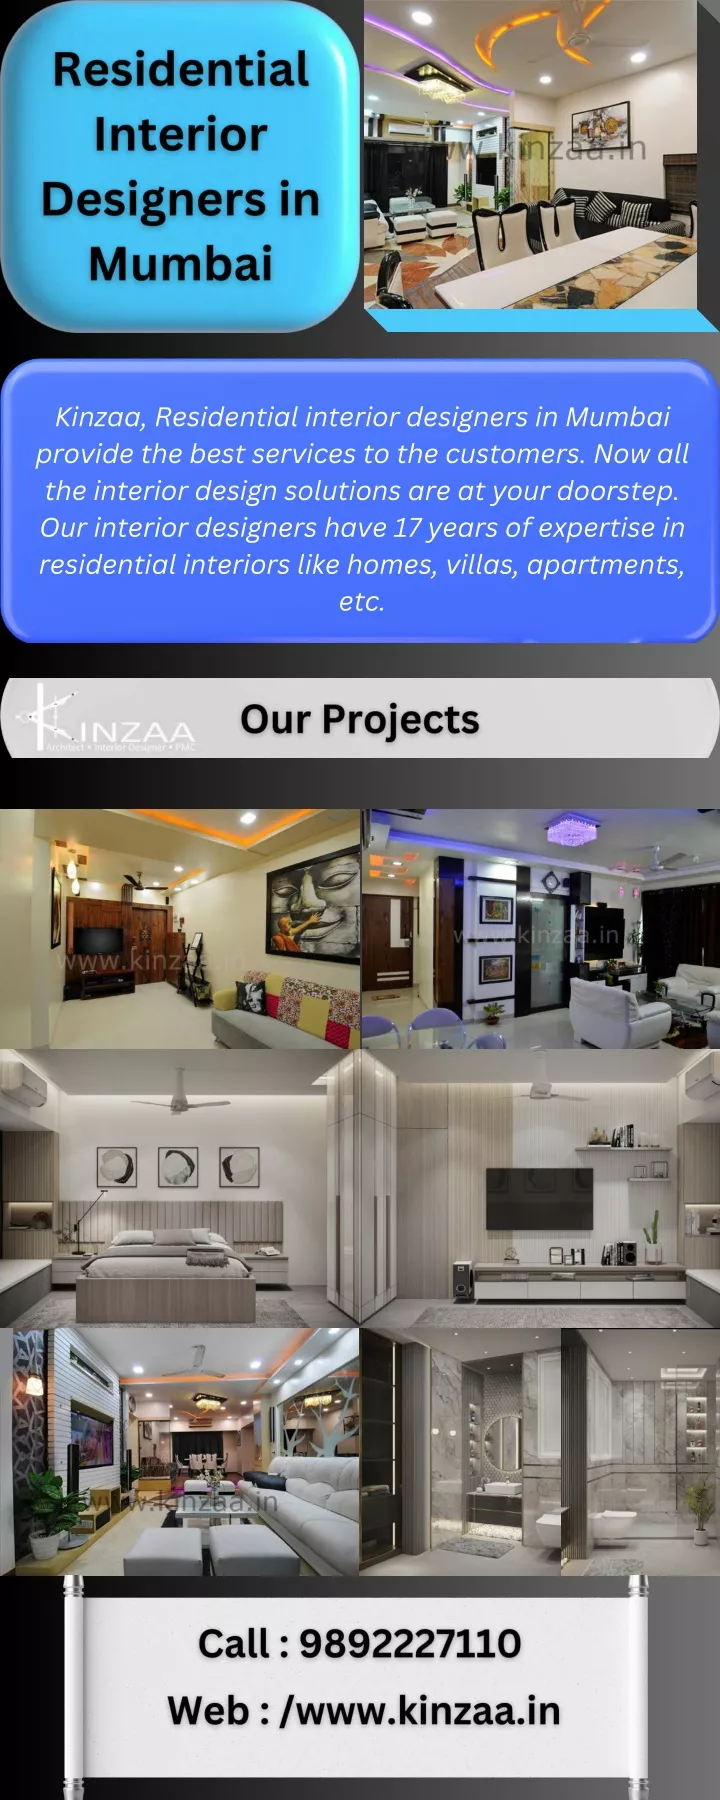 kinzaa residential interior designers in mumbai